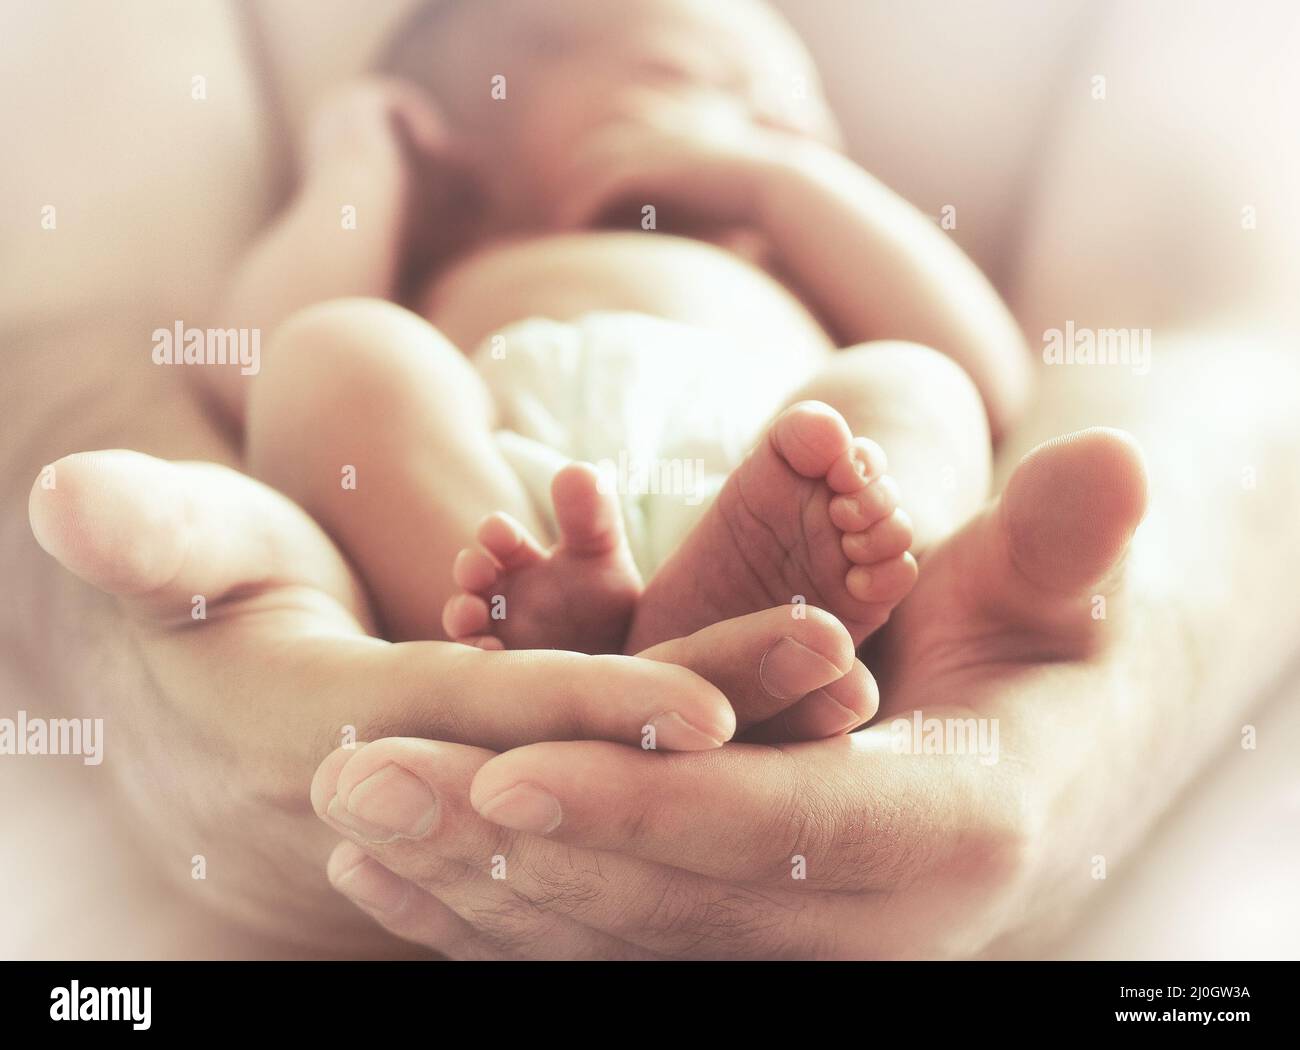 Sleeping newborn baby on male hands Stock Photo